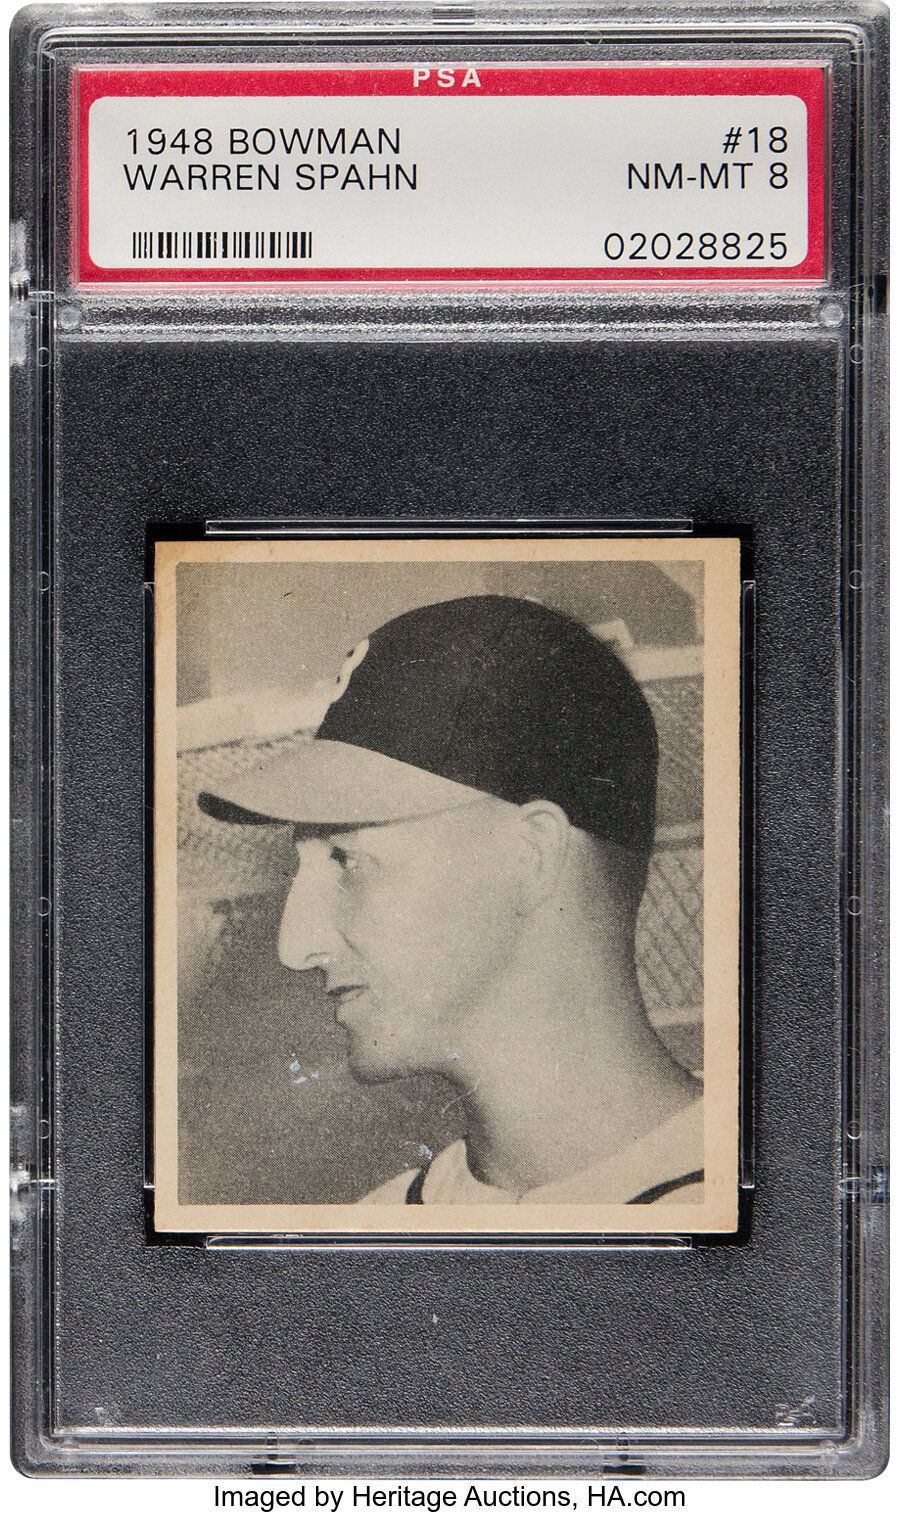 1948 Bowman Warren Spahn Rookie #18 PSA NM-MT 8